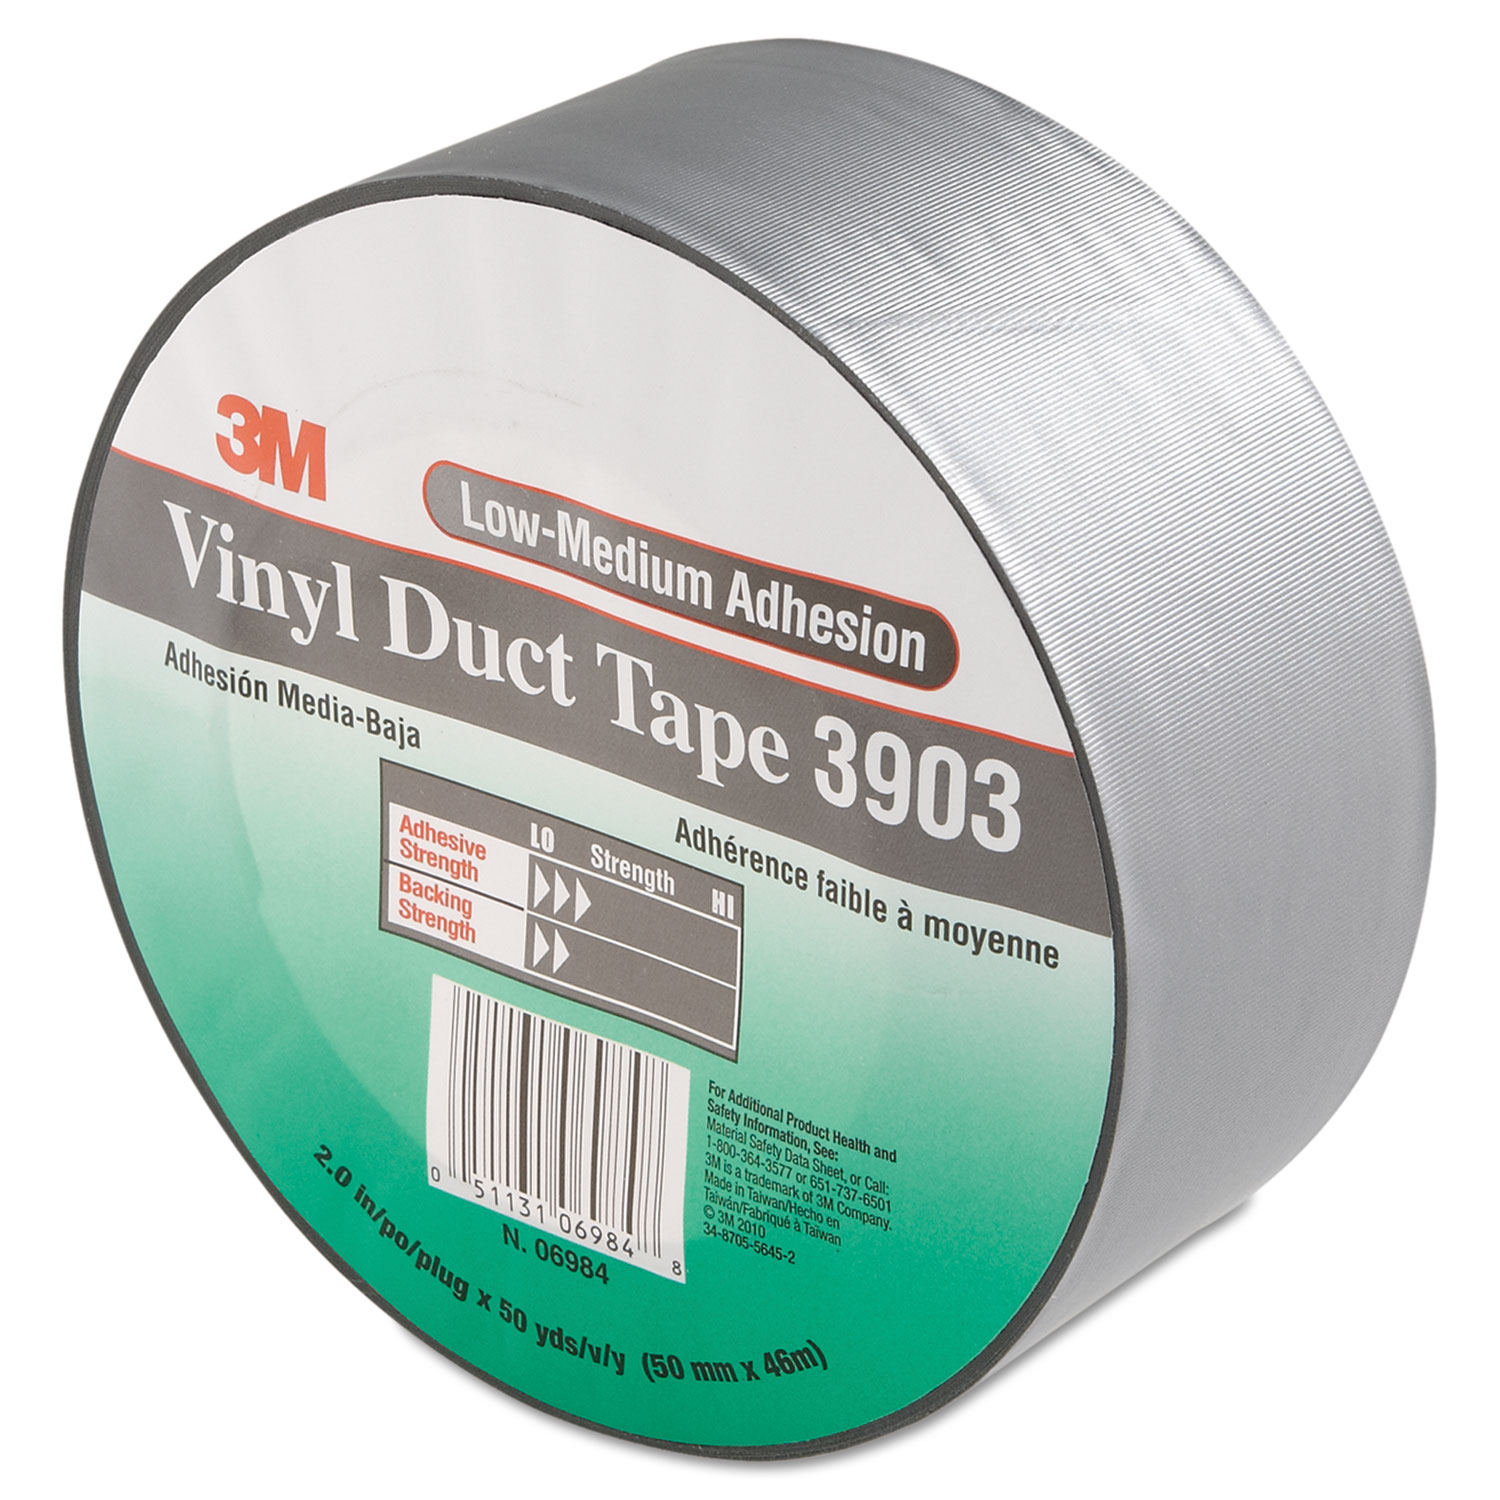  3M 70007506929 3903 Vinyl Duct Tape, 2 x 50 yds, Gray (MMM05113106984) 